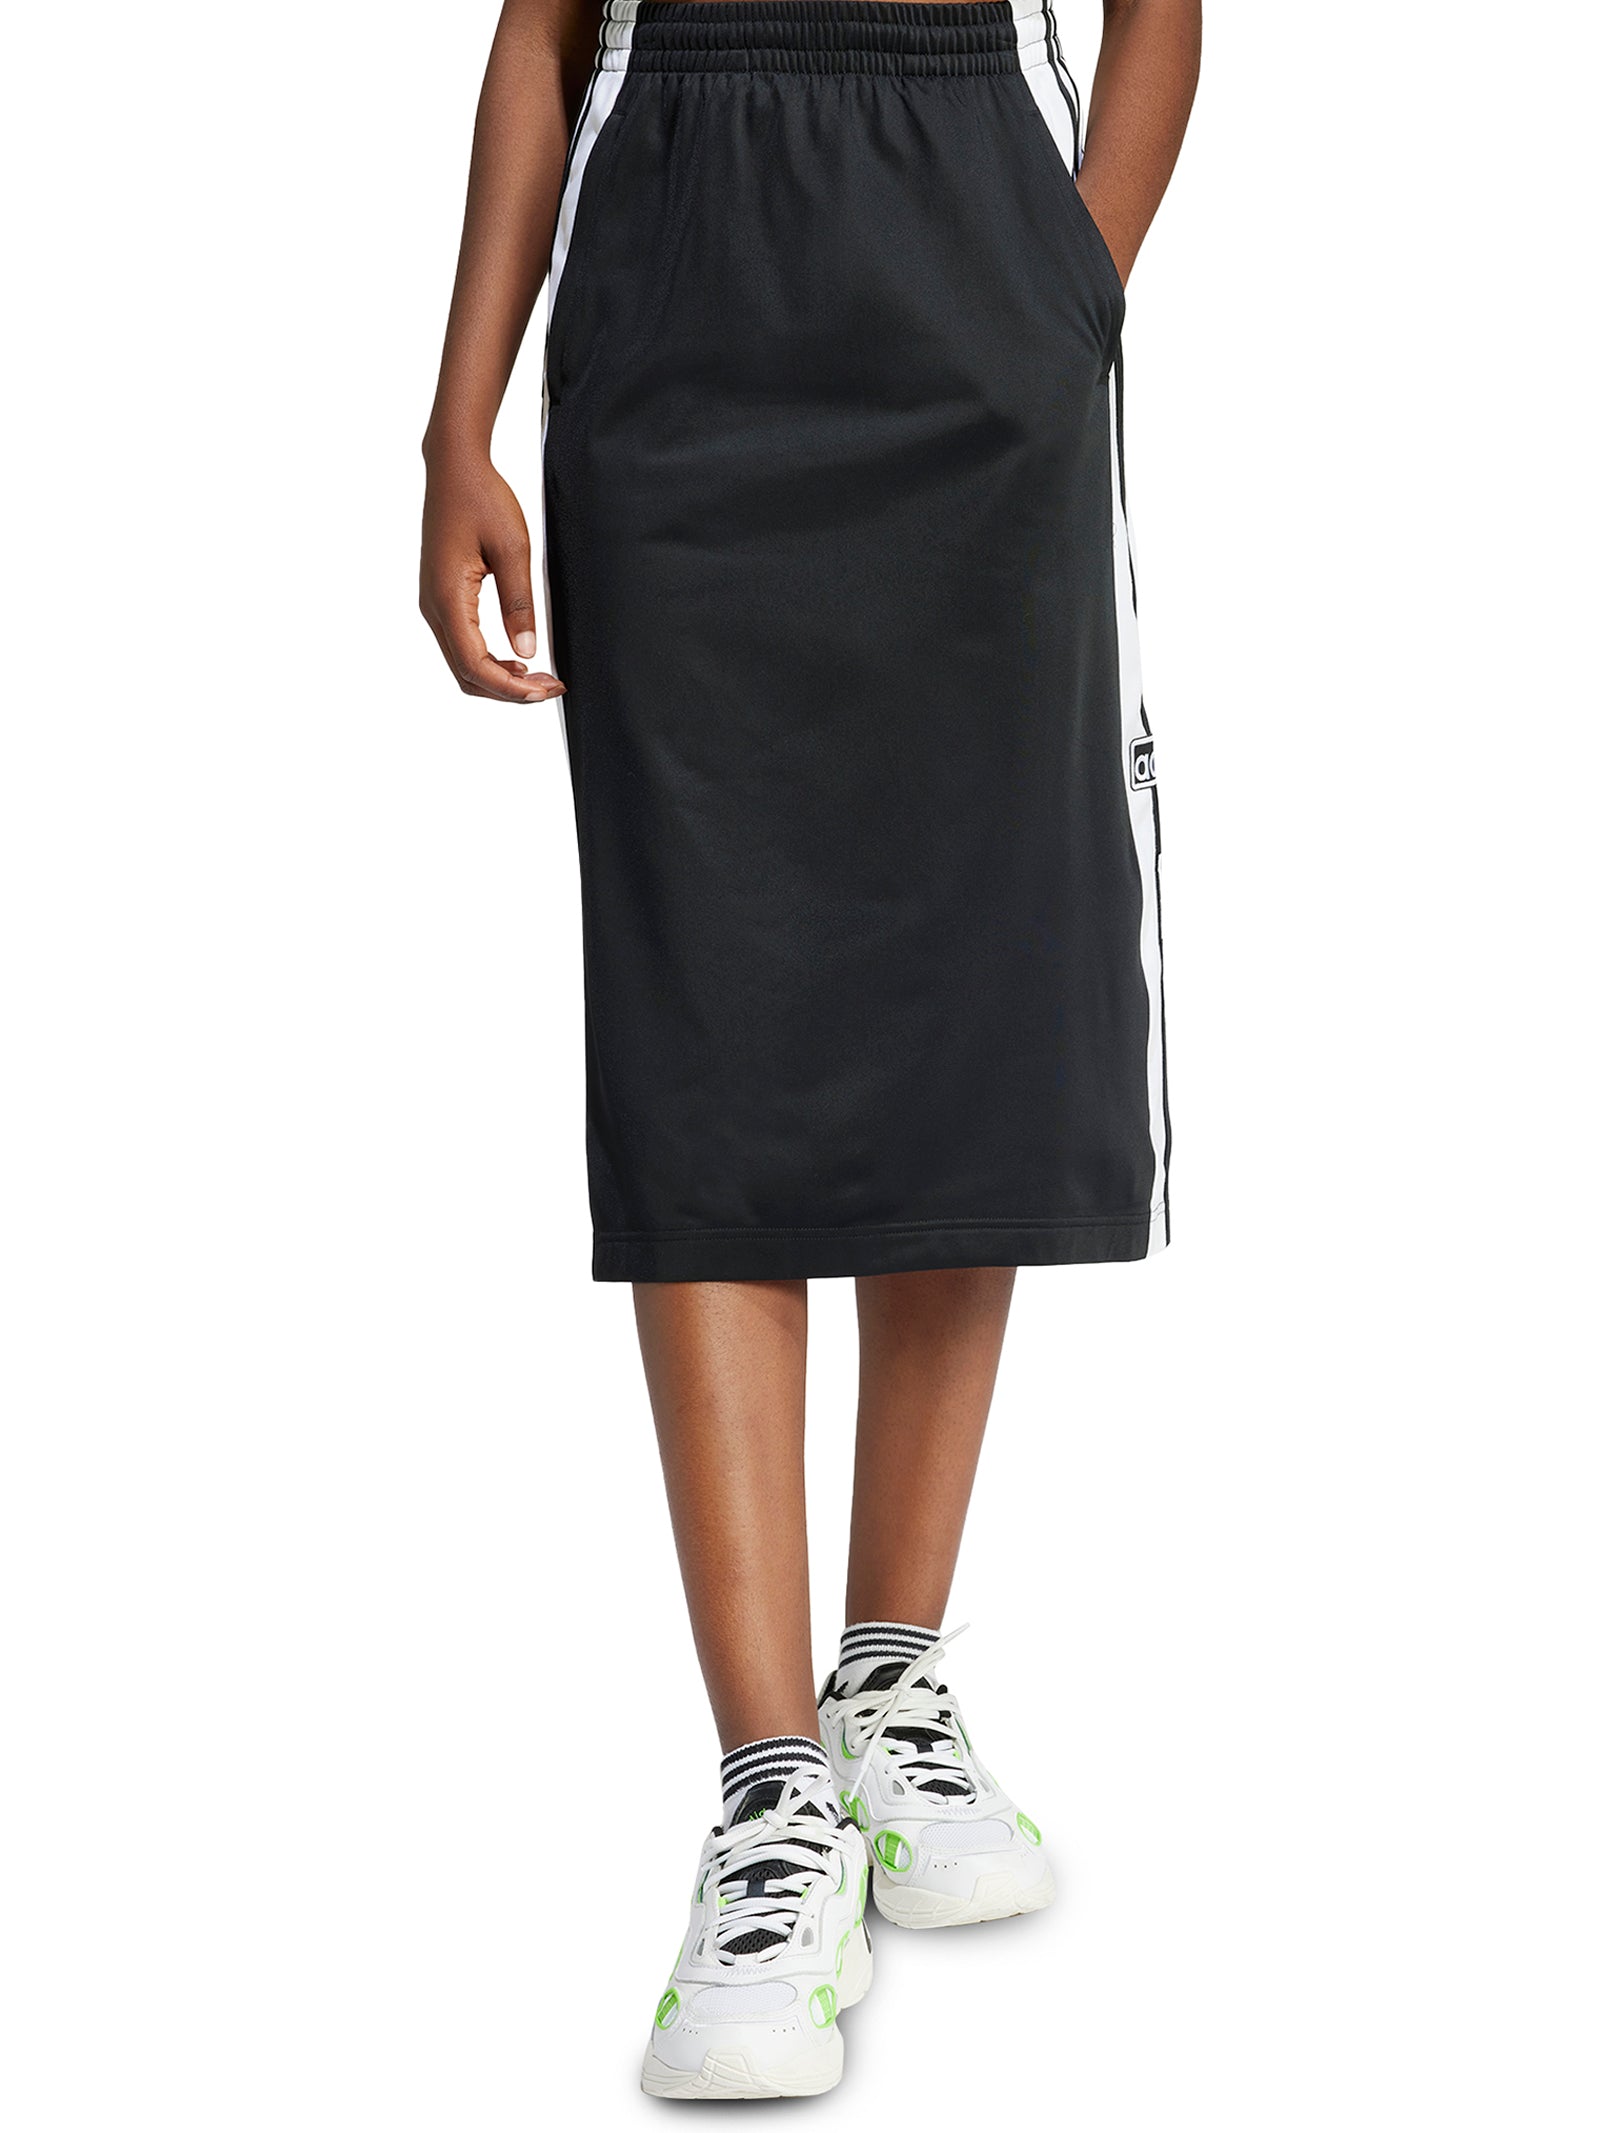 Adibreak Snap Button Midi Skirt in Black